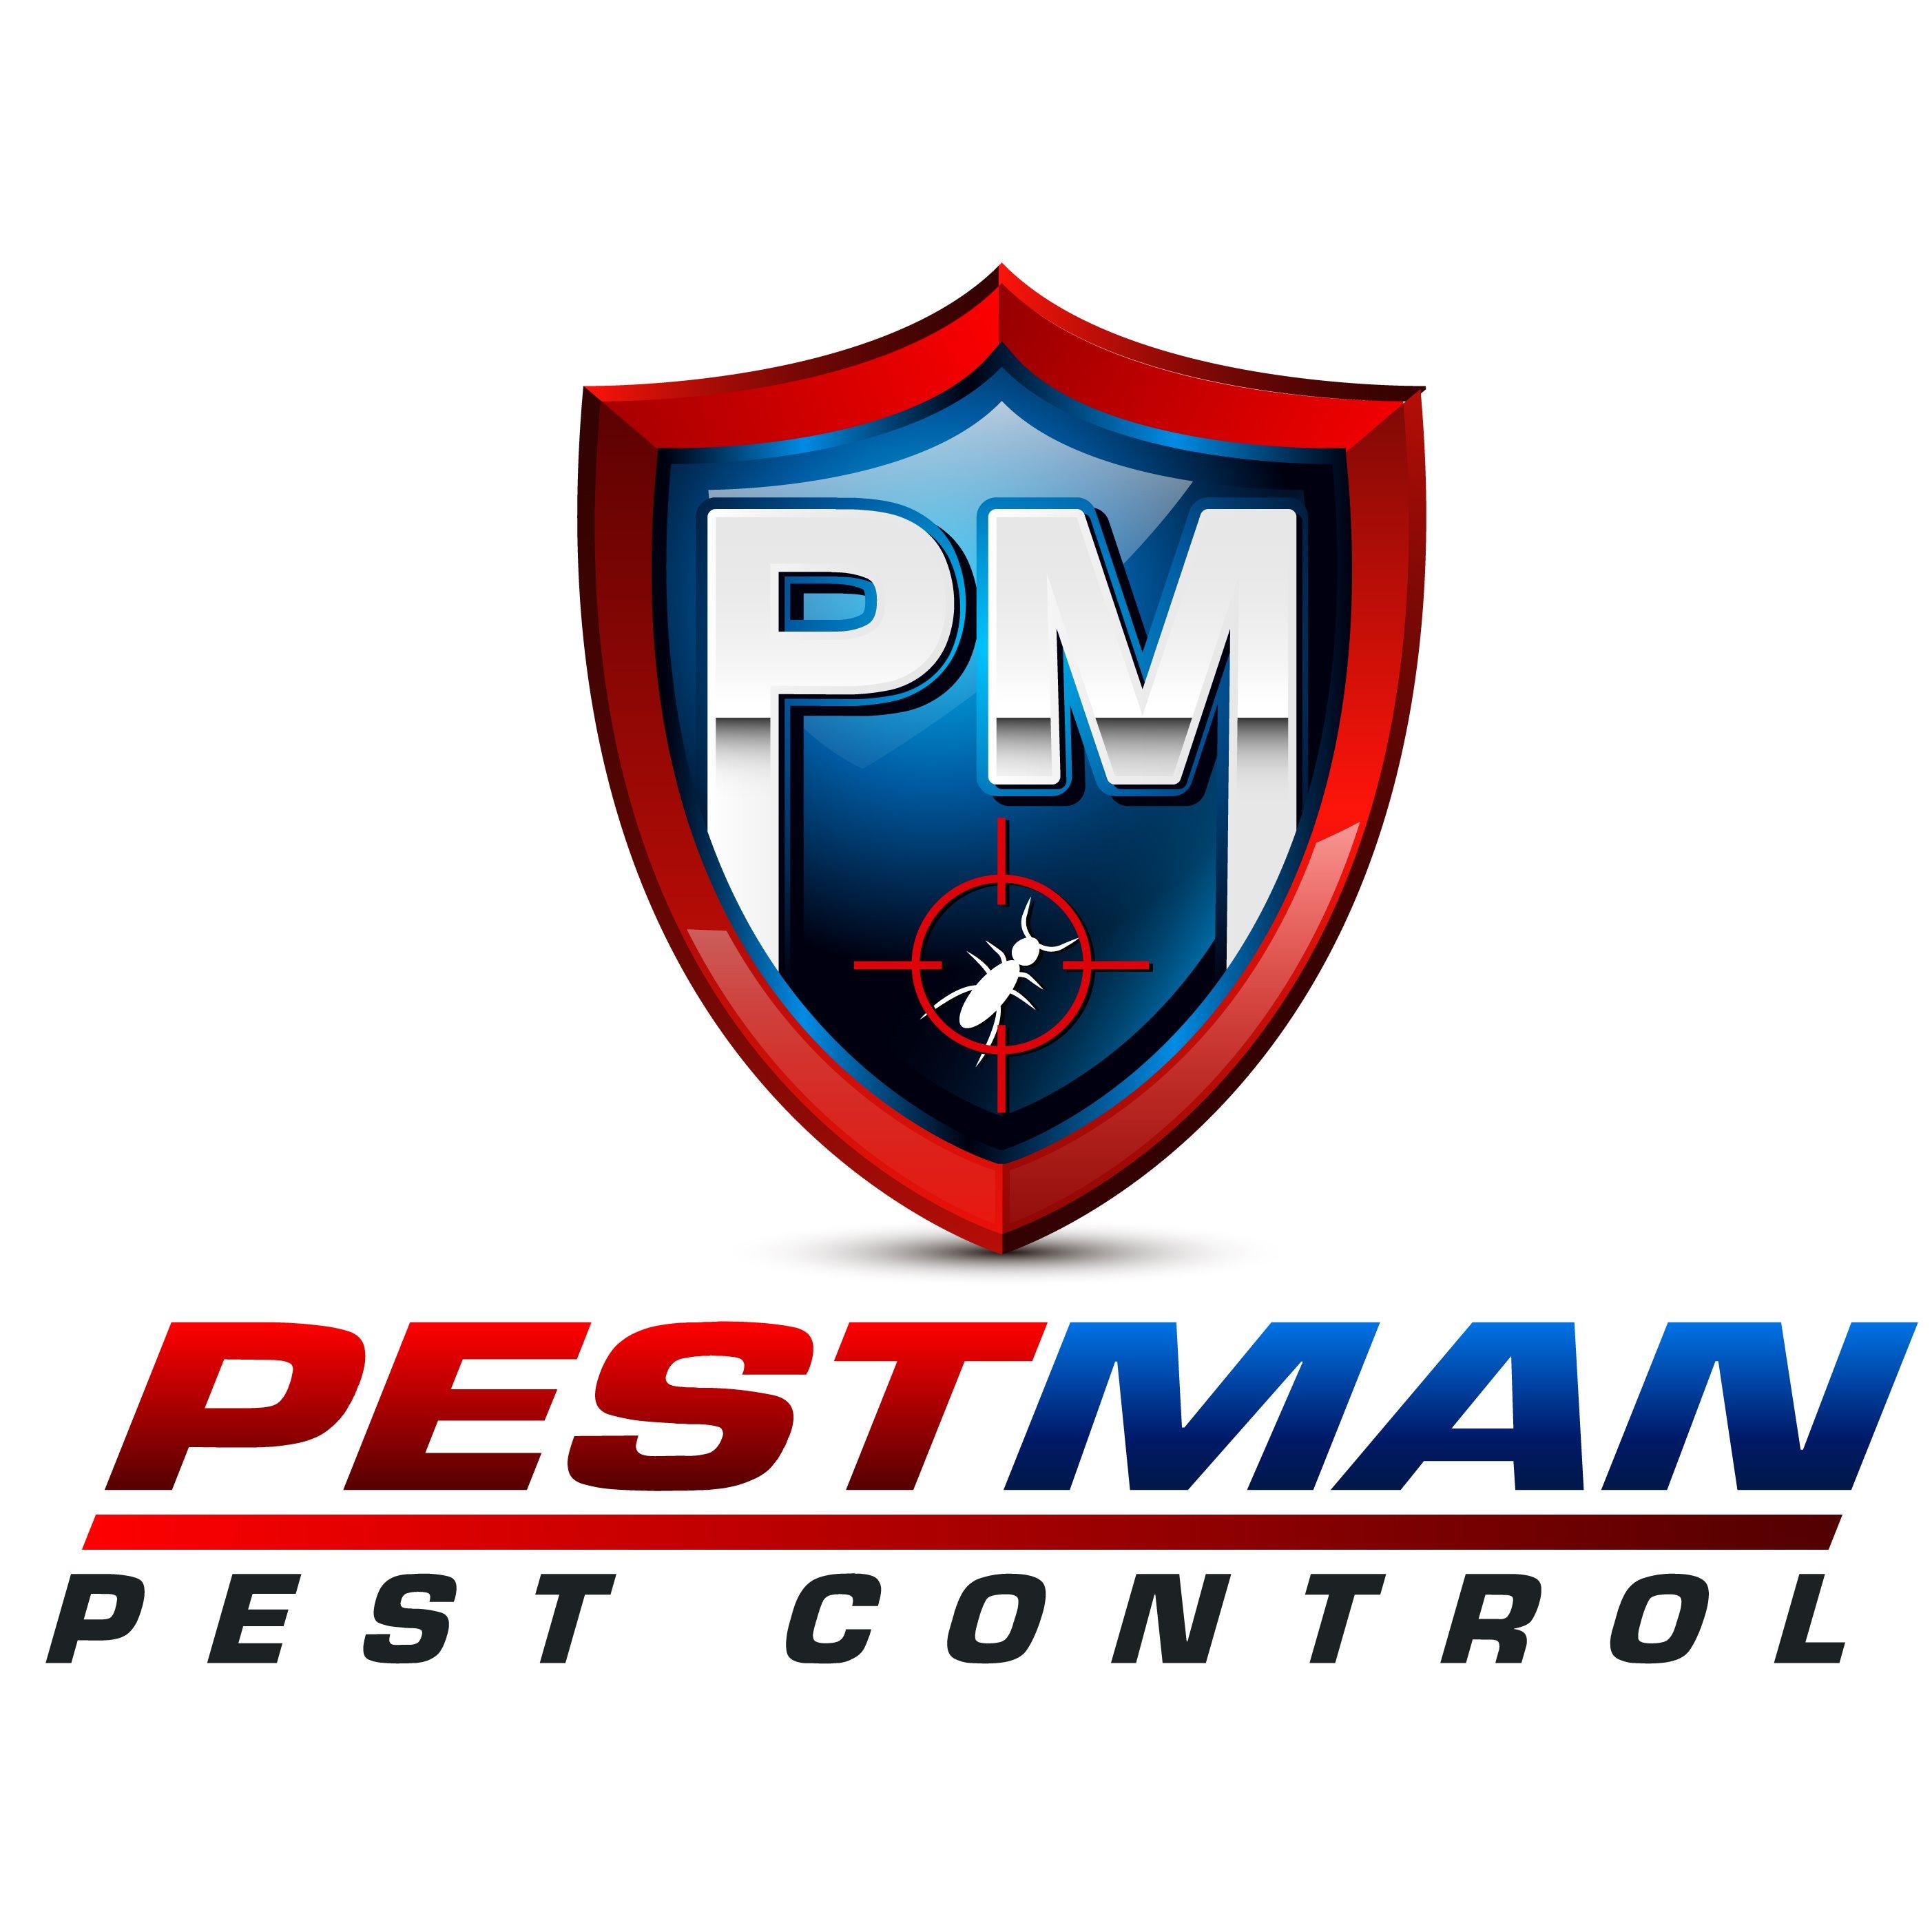 PestMan Pest Control Coupons near me in Visalia | 8coupons